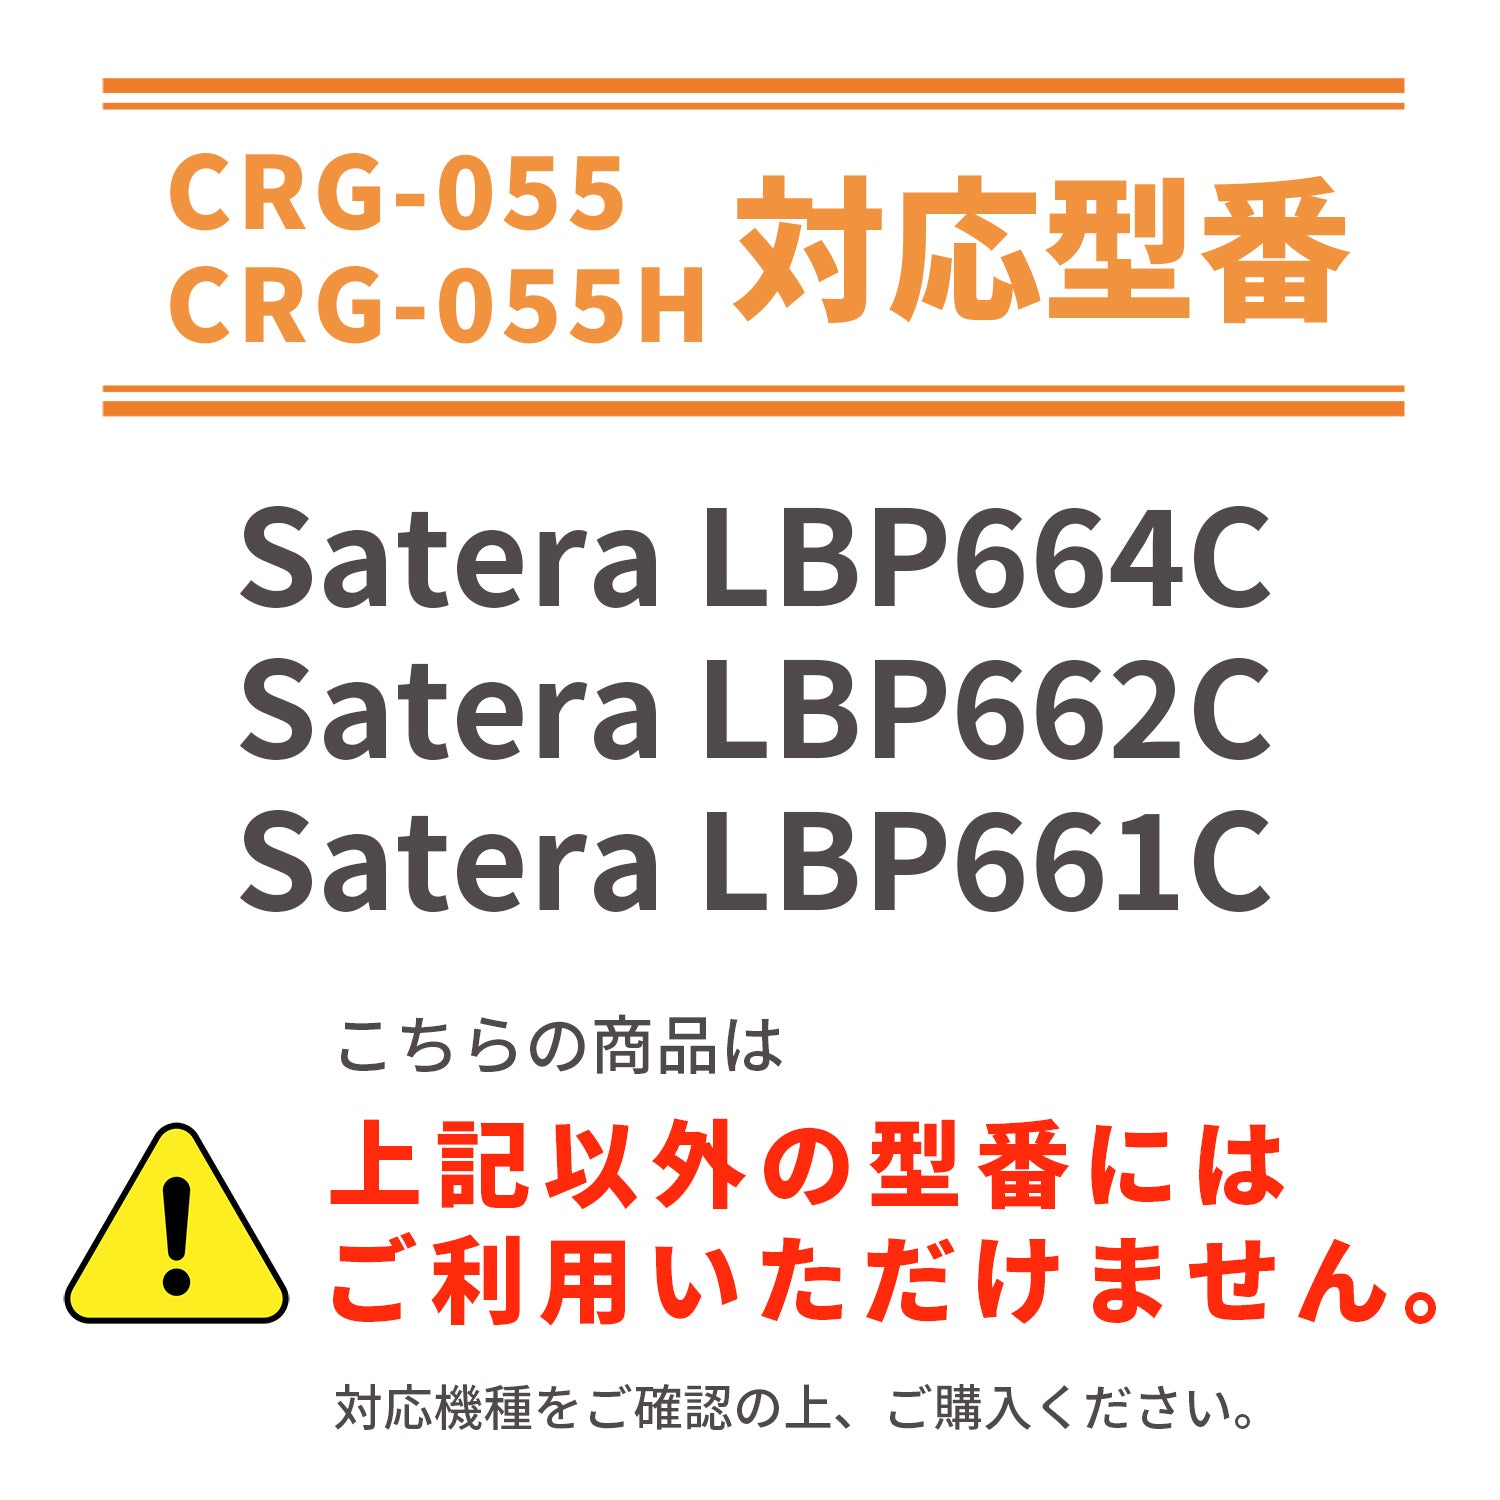 CRG-055H-4PK CRG055H )互換 キャノン トナーカートリッジ  大容量 4色セット Satera LBP664C LBP662C LBP661C - 7